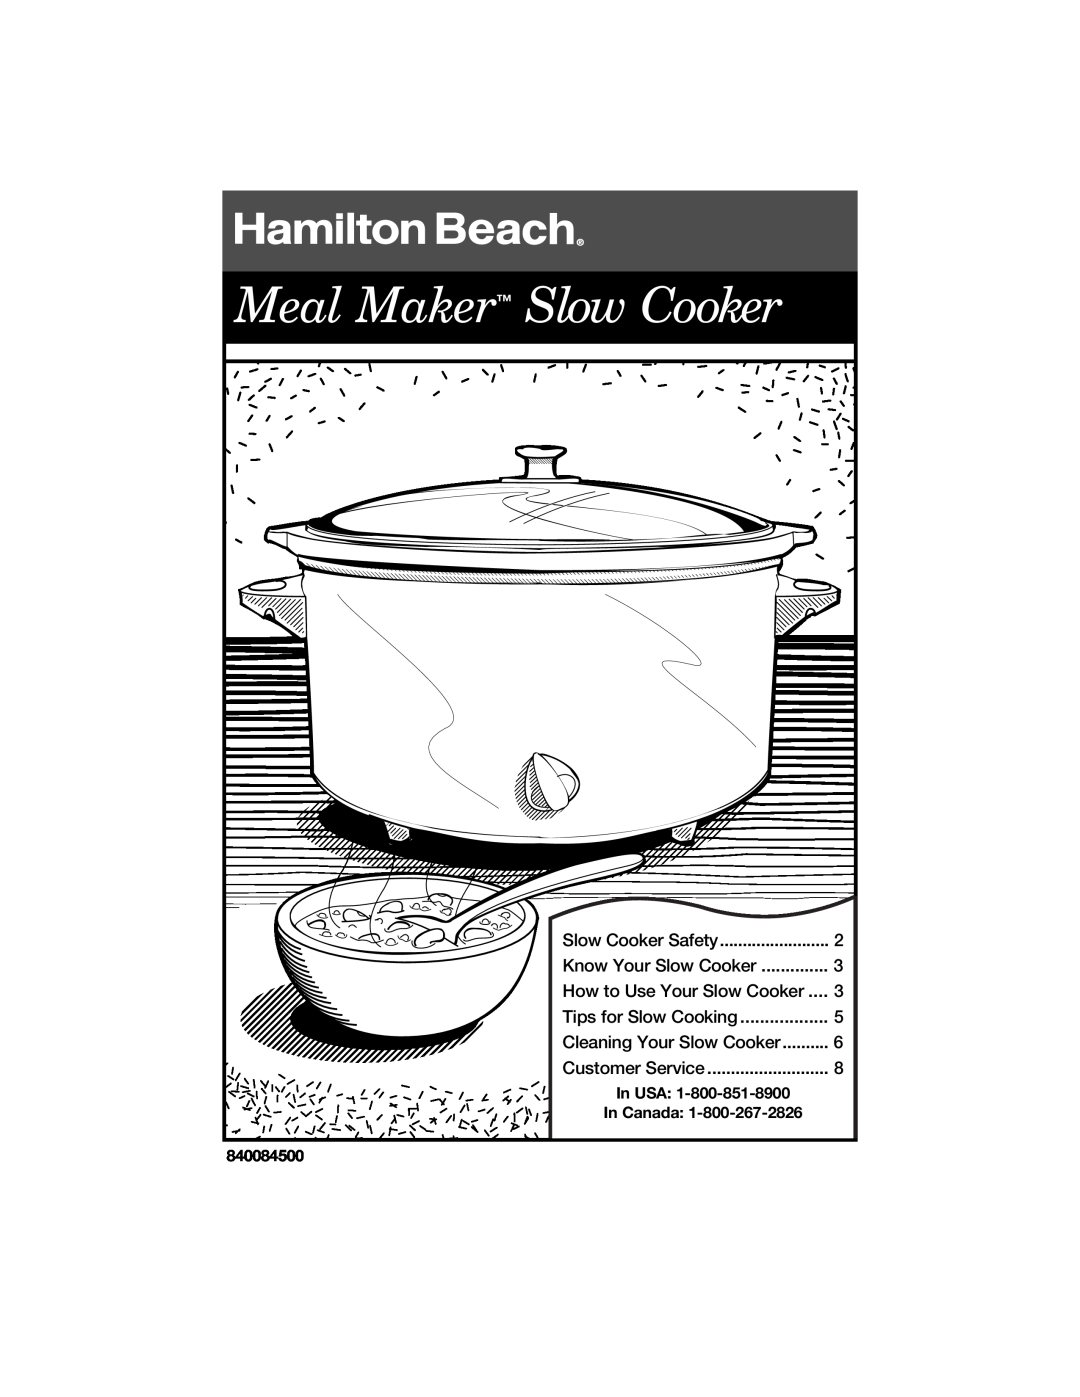 Hamilton Beach 840084500 manual Meal Maker Slow Cooker 